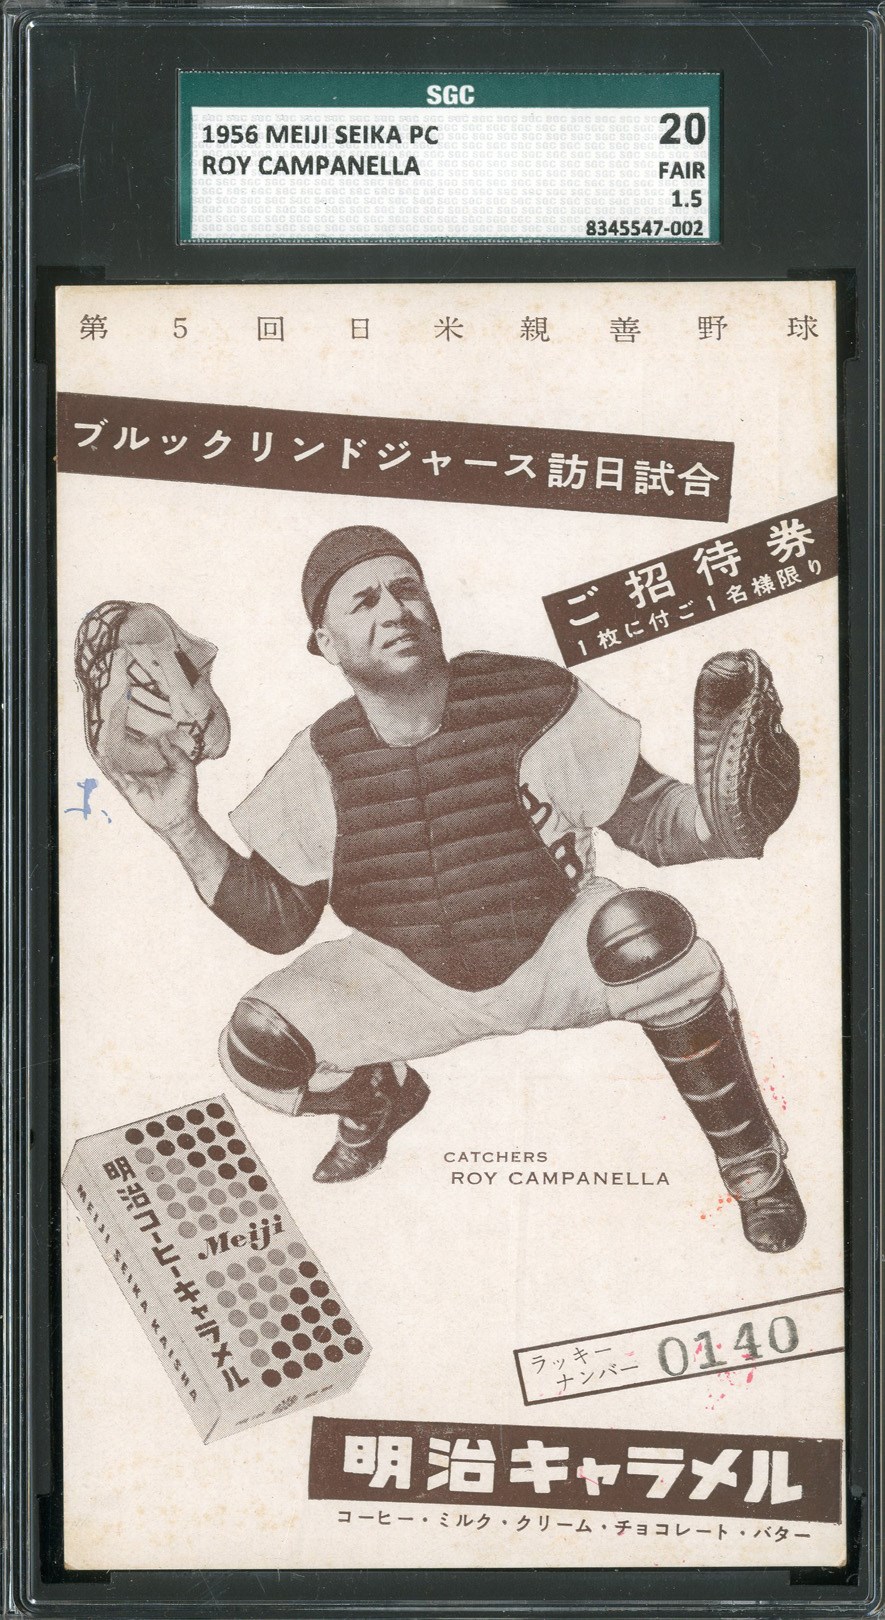 1956 Brooklyn Dodgers Meiji Seika Co., Japan Tour Ticket Invitation Card Featuring Roy Campanella